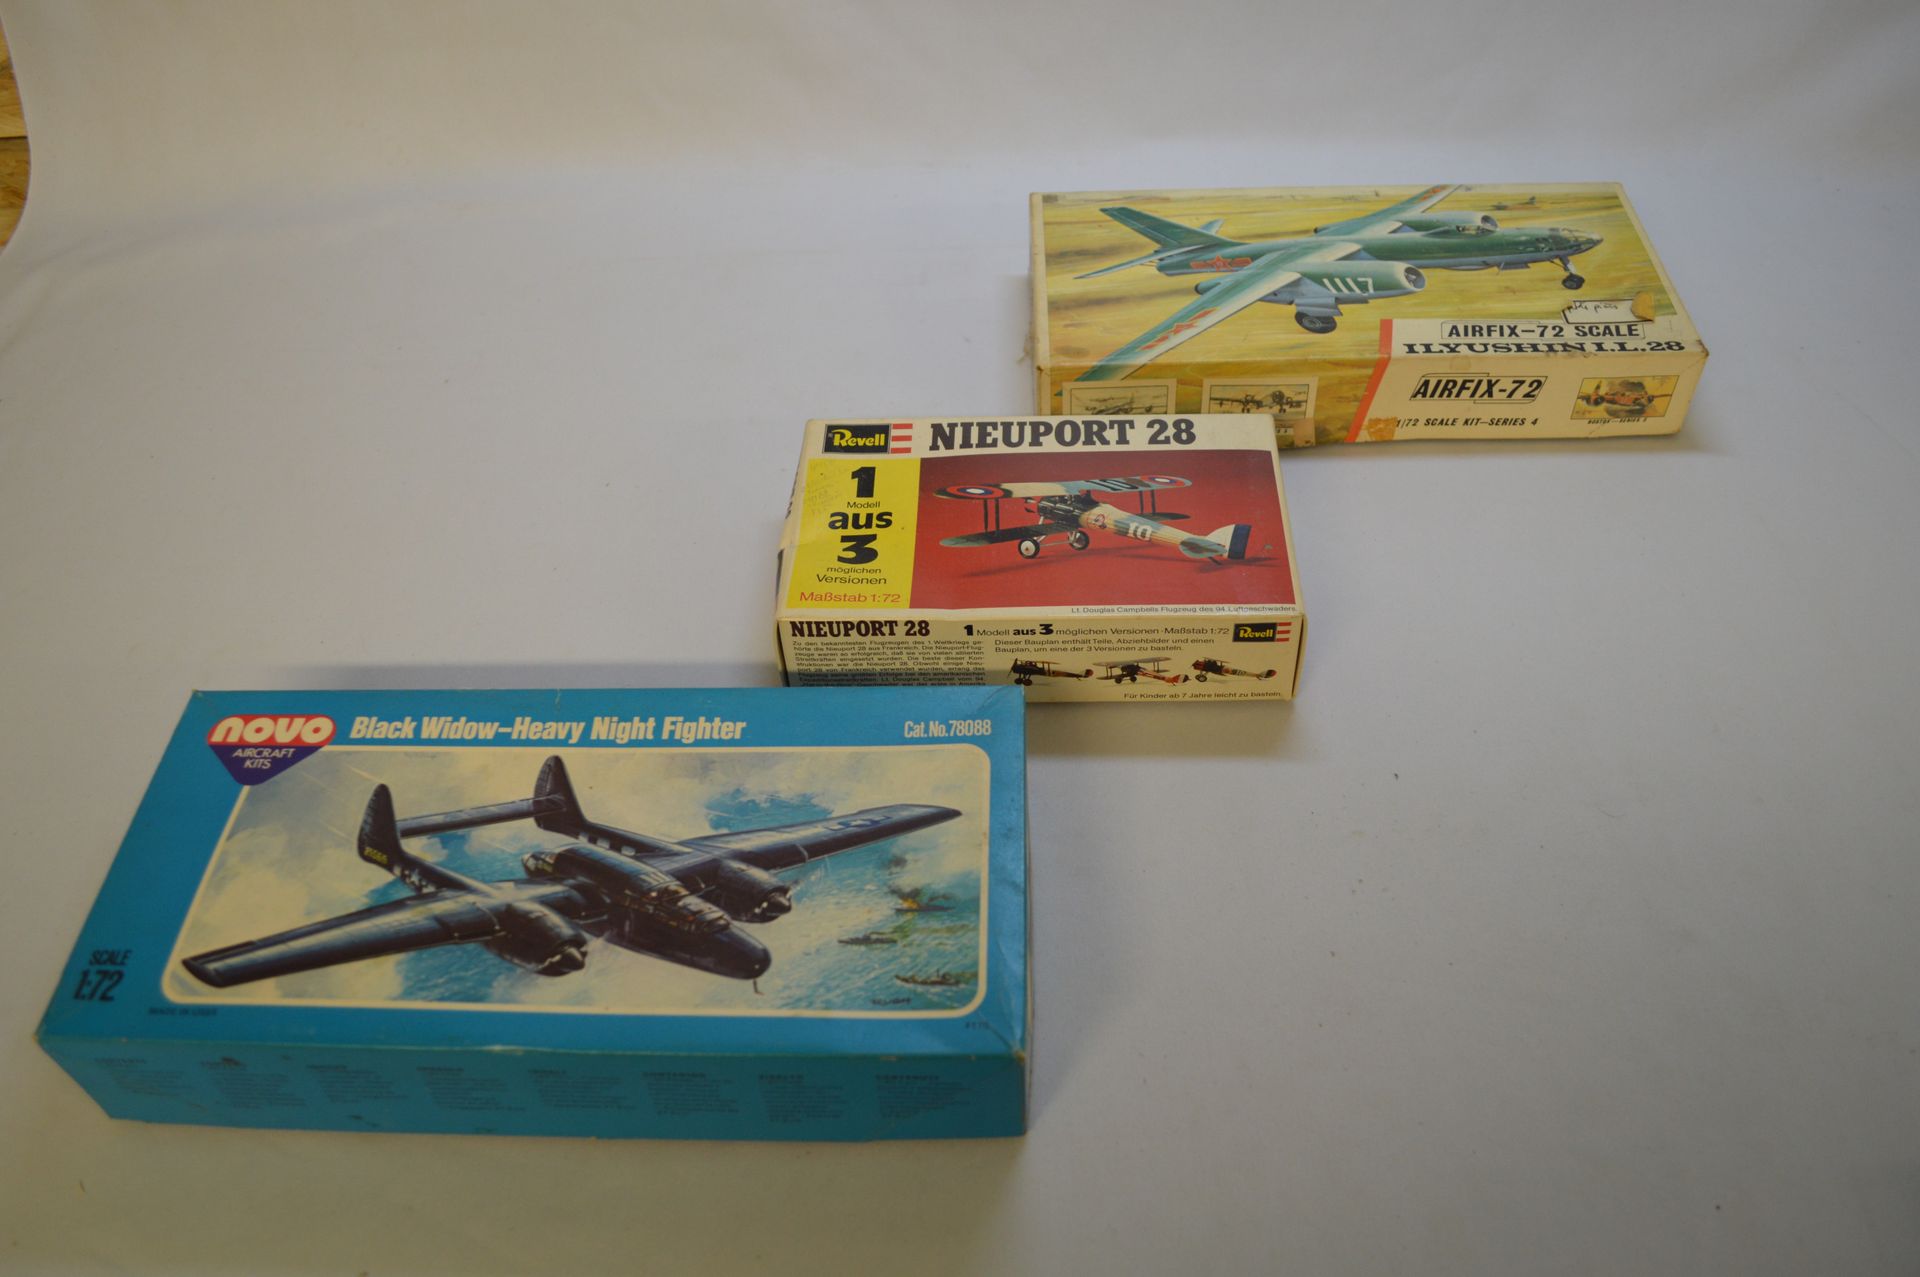 Null Set of aircraft miniatures : 



- AIRFIX - 72 Scale ILYUSHIN I.L.28 - 1 : &hellip;